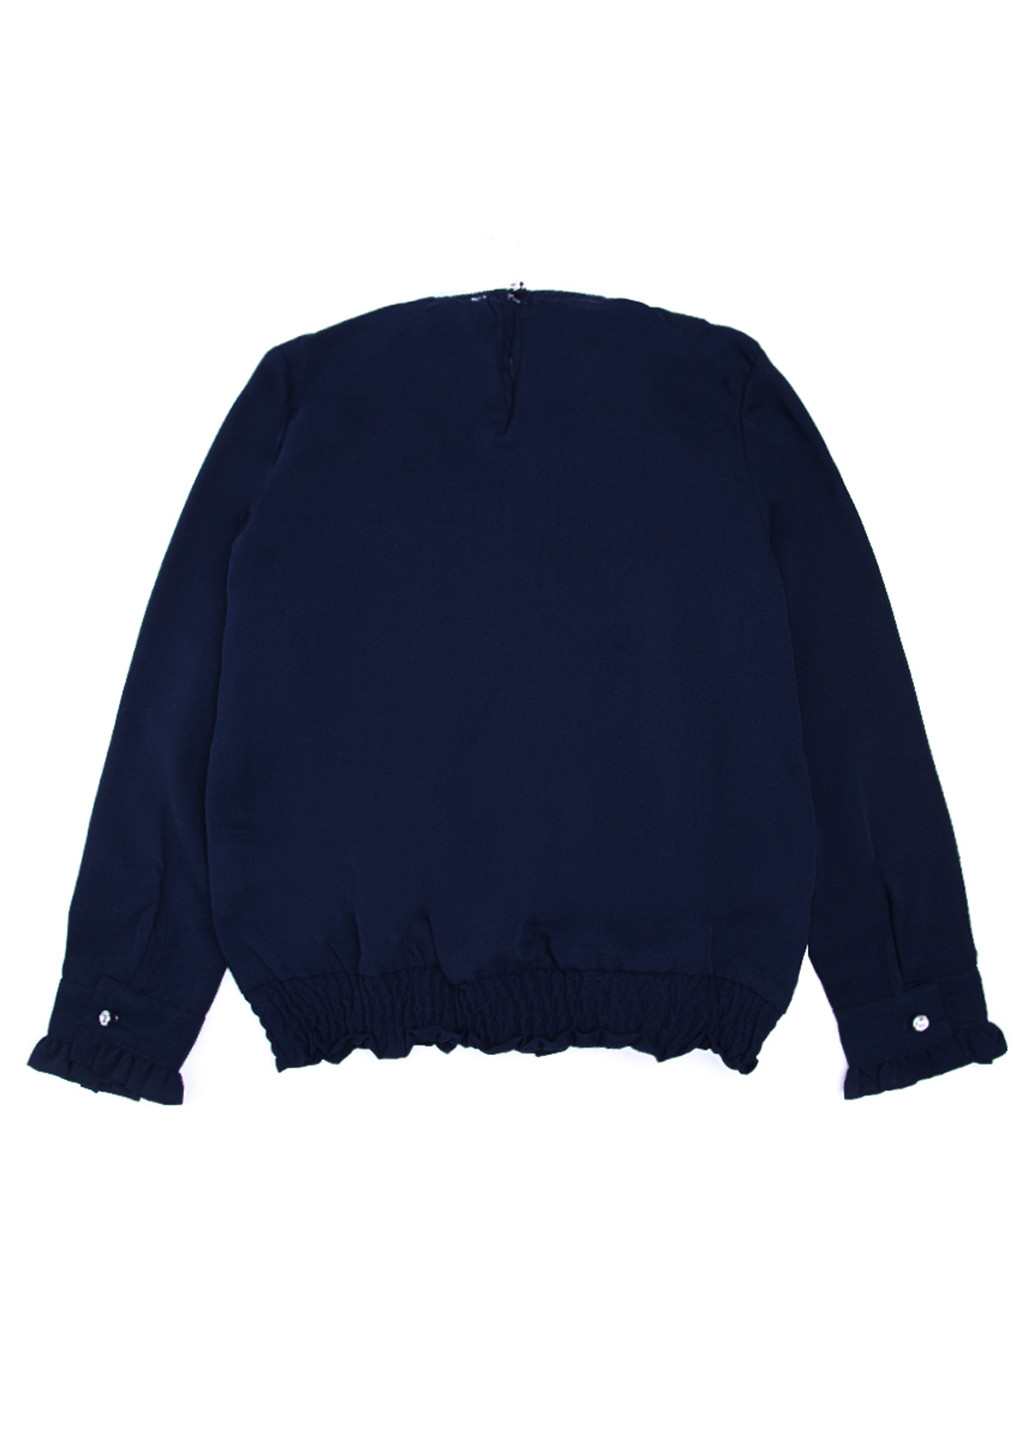 Темно-синяя блузка с длинным рукавом Pinetti демисезонная